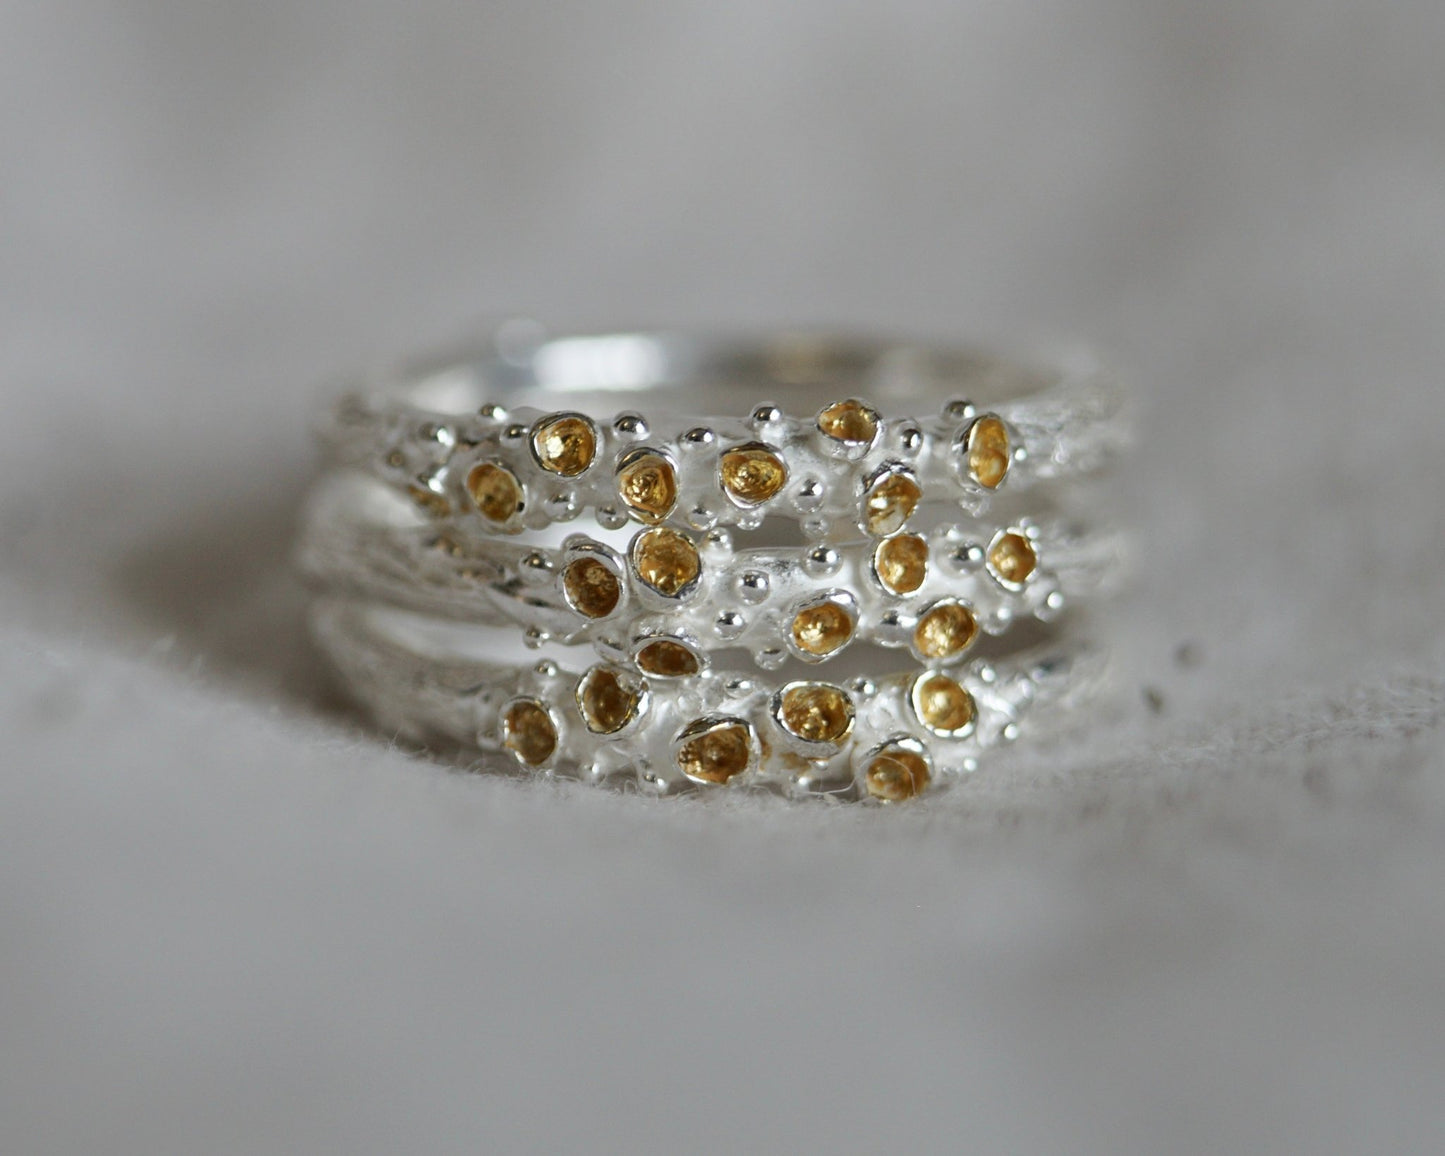 Lichen Cup Rings - Melissa Yarlett Jewellery